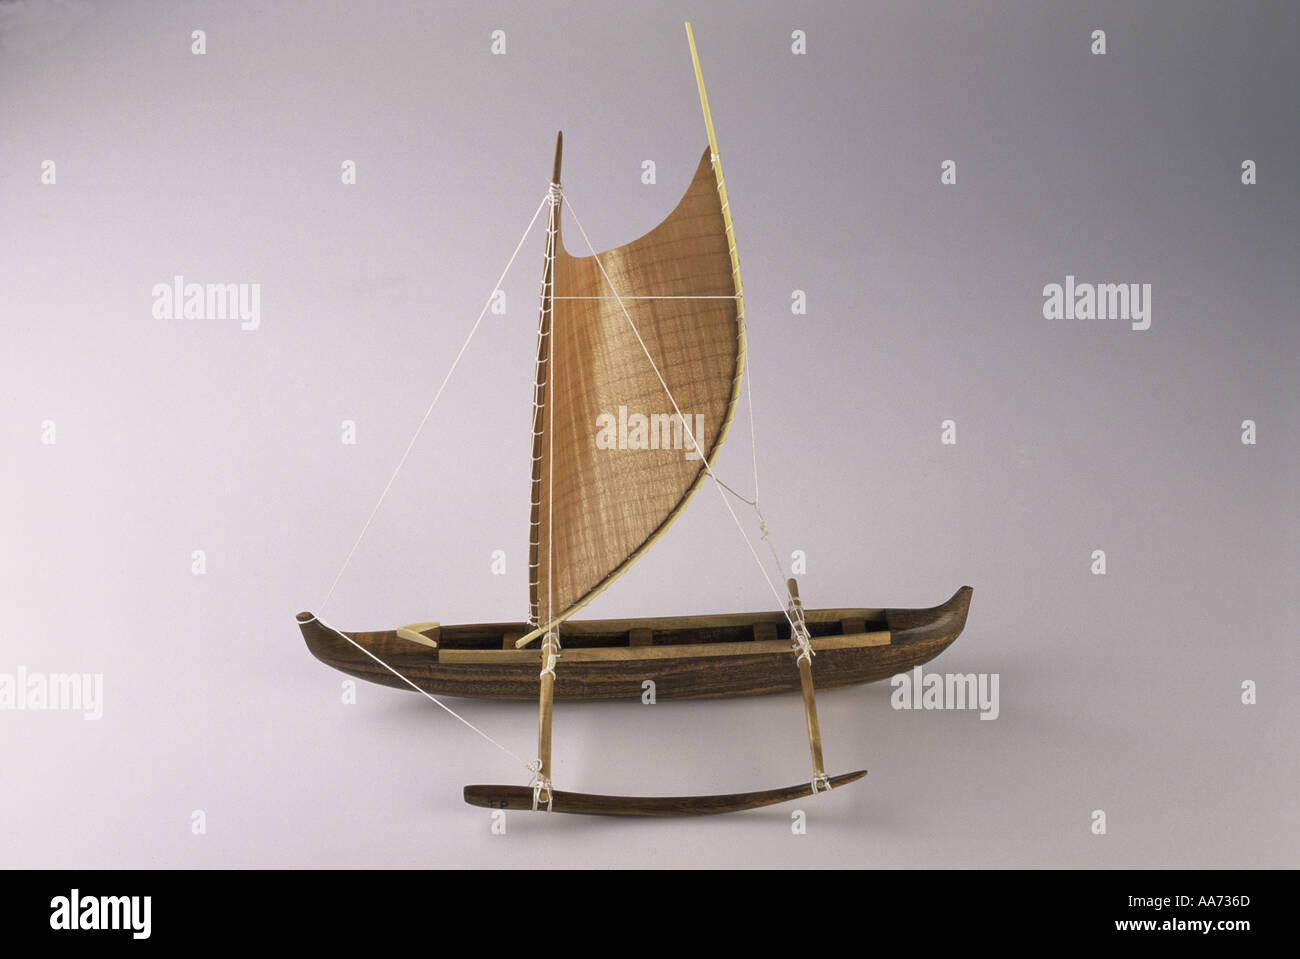 Polinesia canoa de Vela Fotografía de stock - Alamy